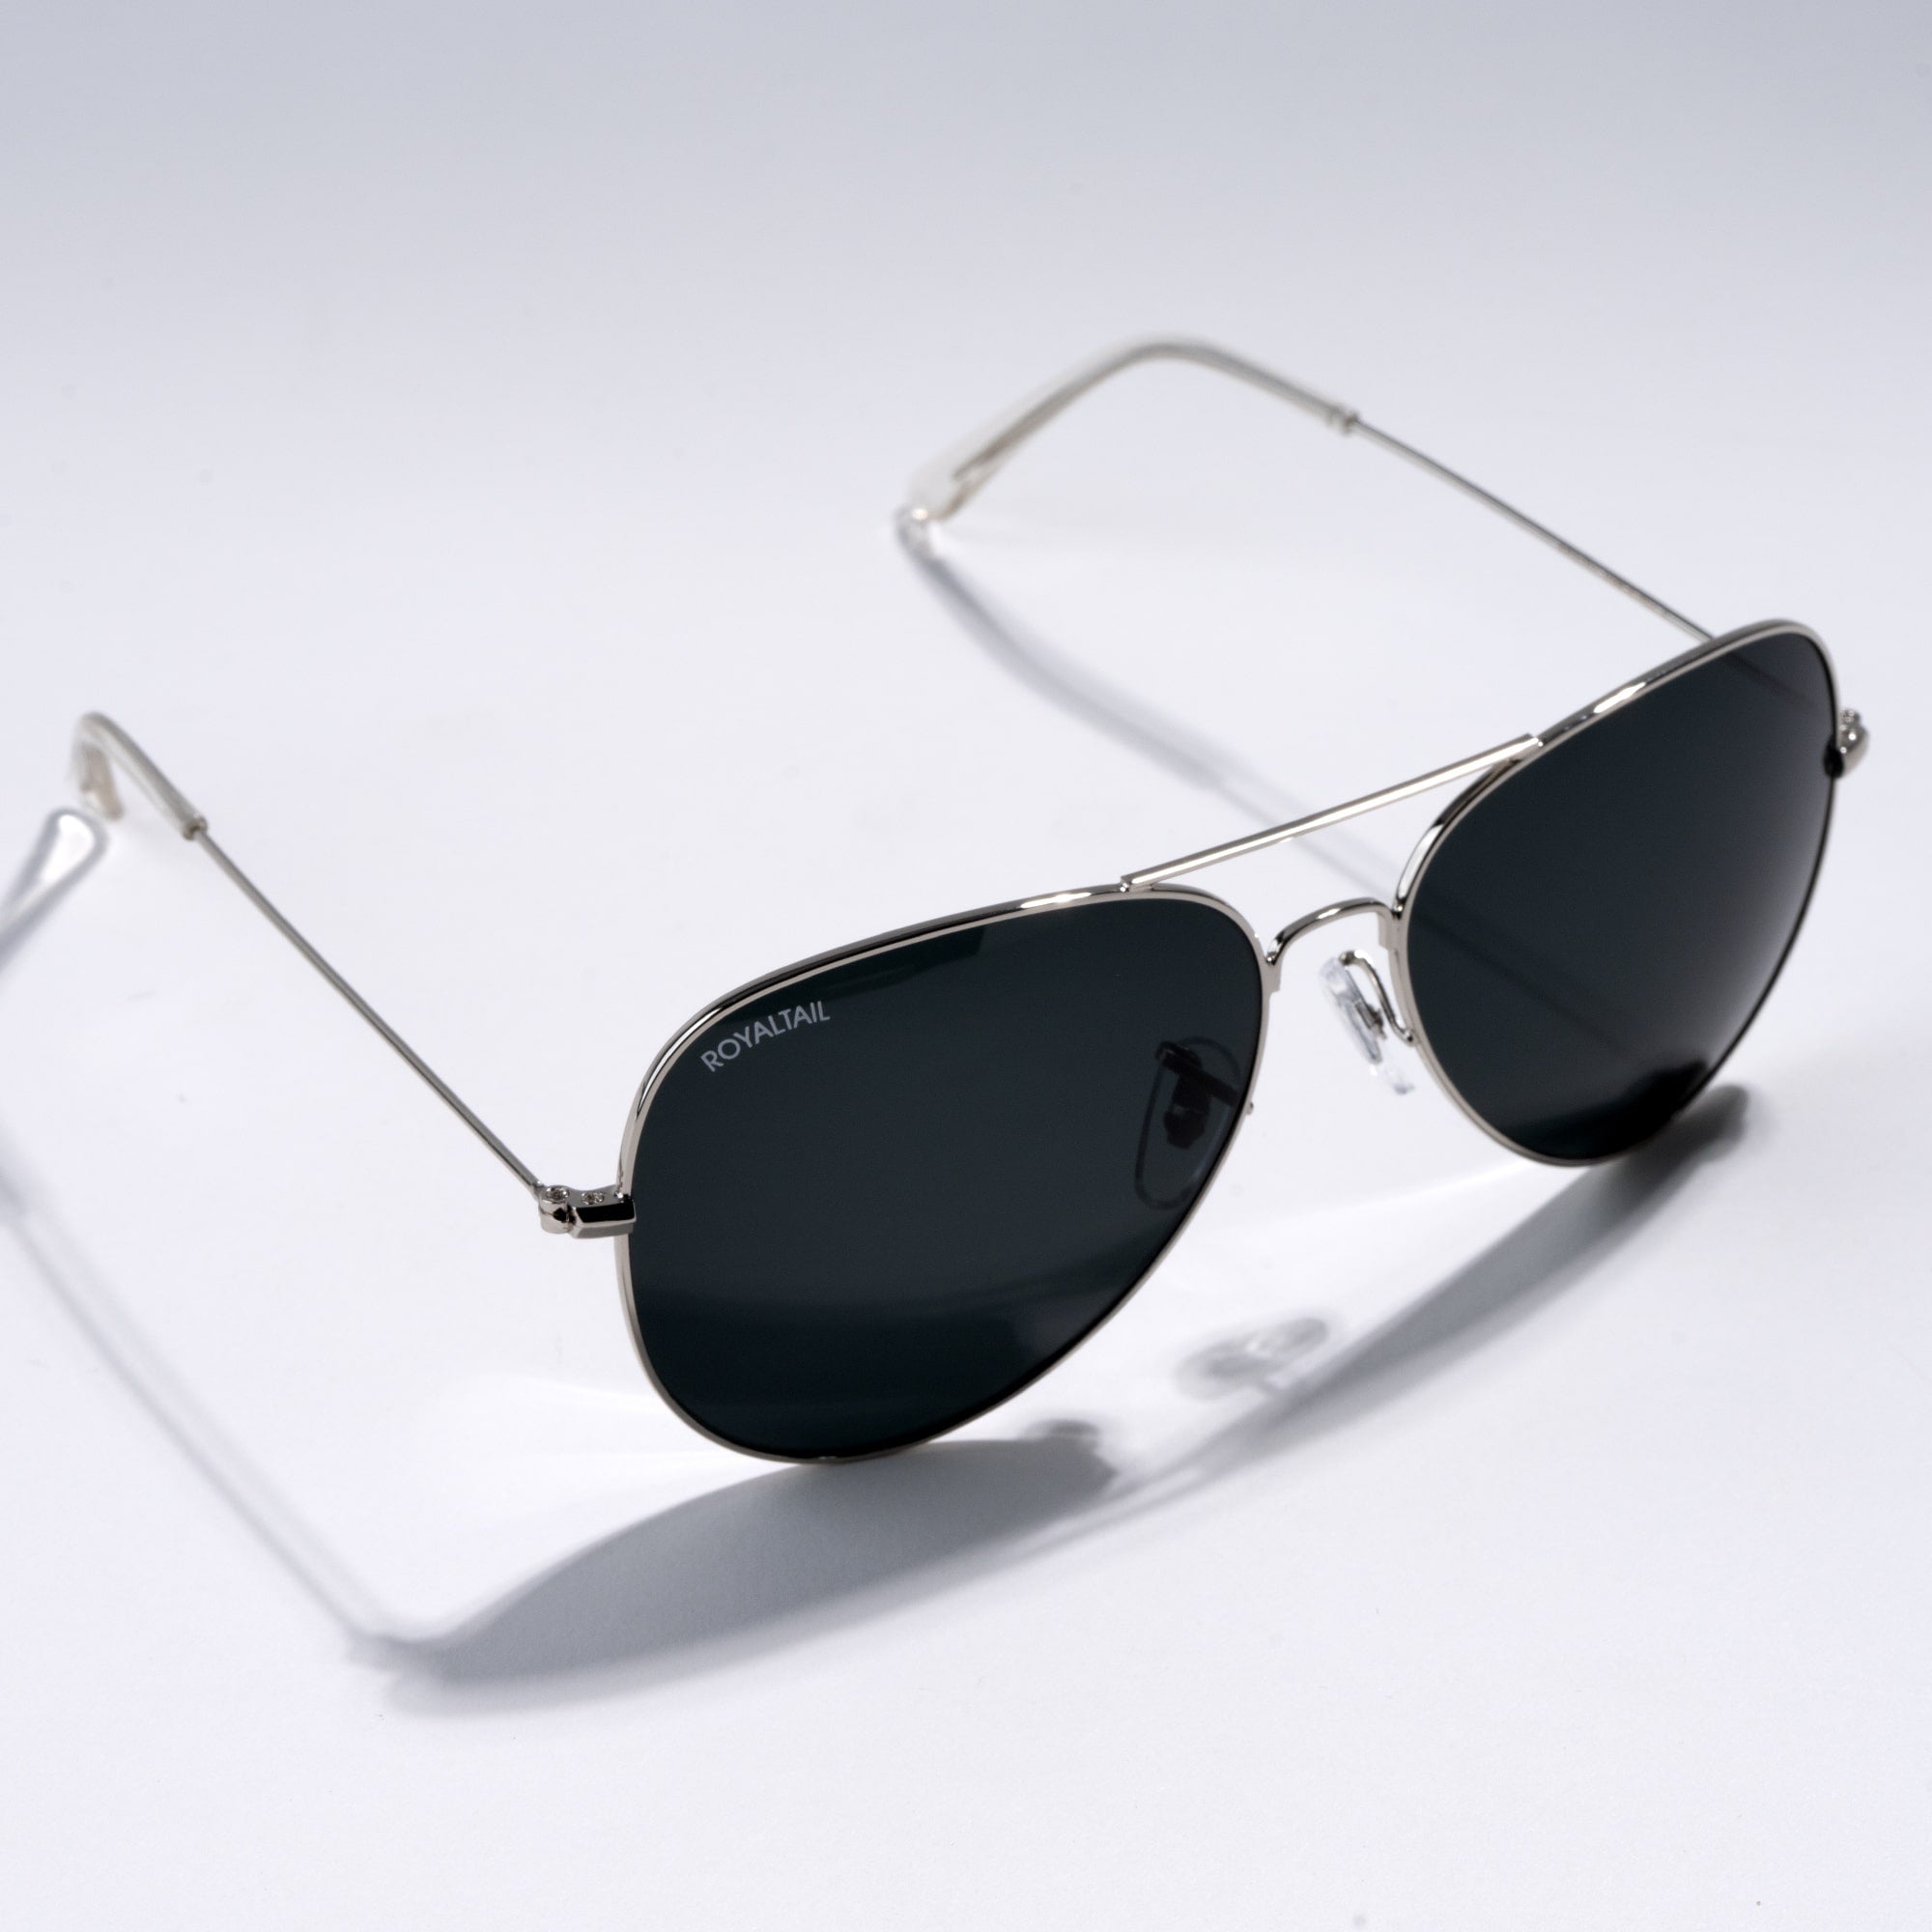 Buy Black frame tinted oversized sunglasses Online. – Odette